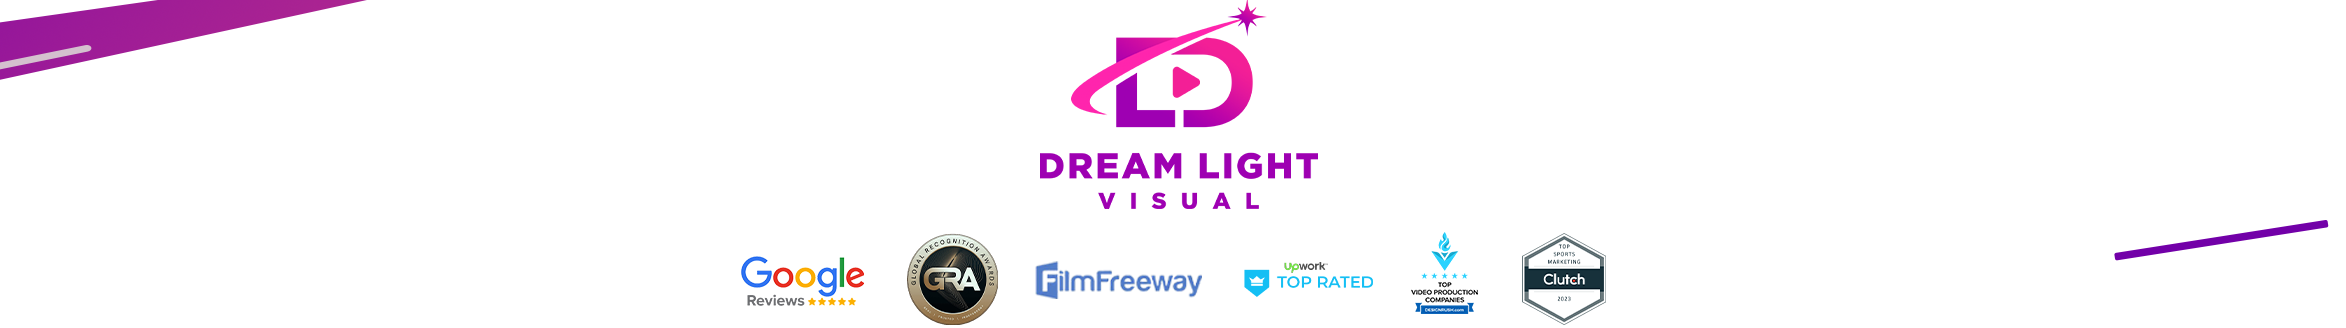 Dream Light Visual's profile banner